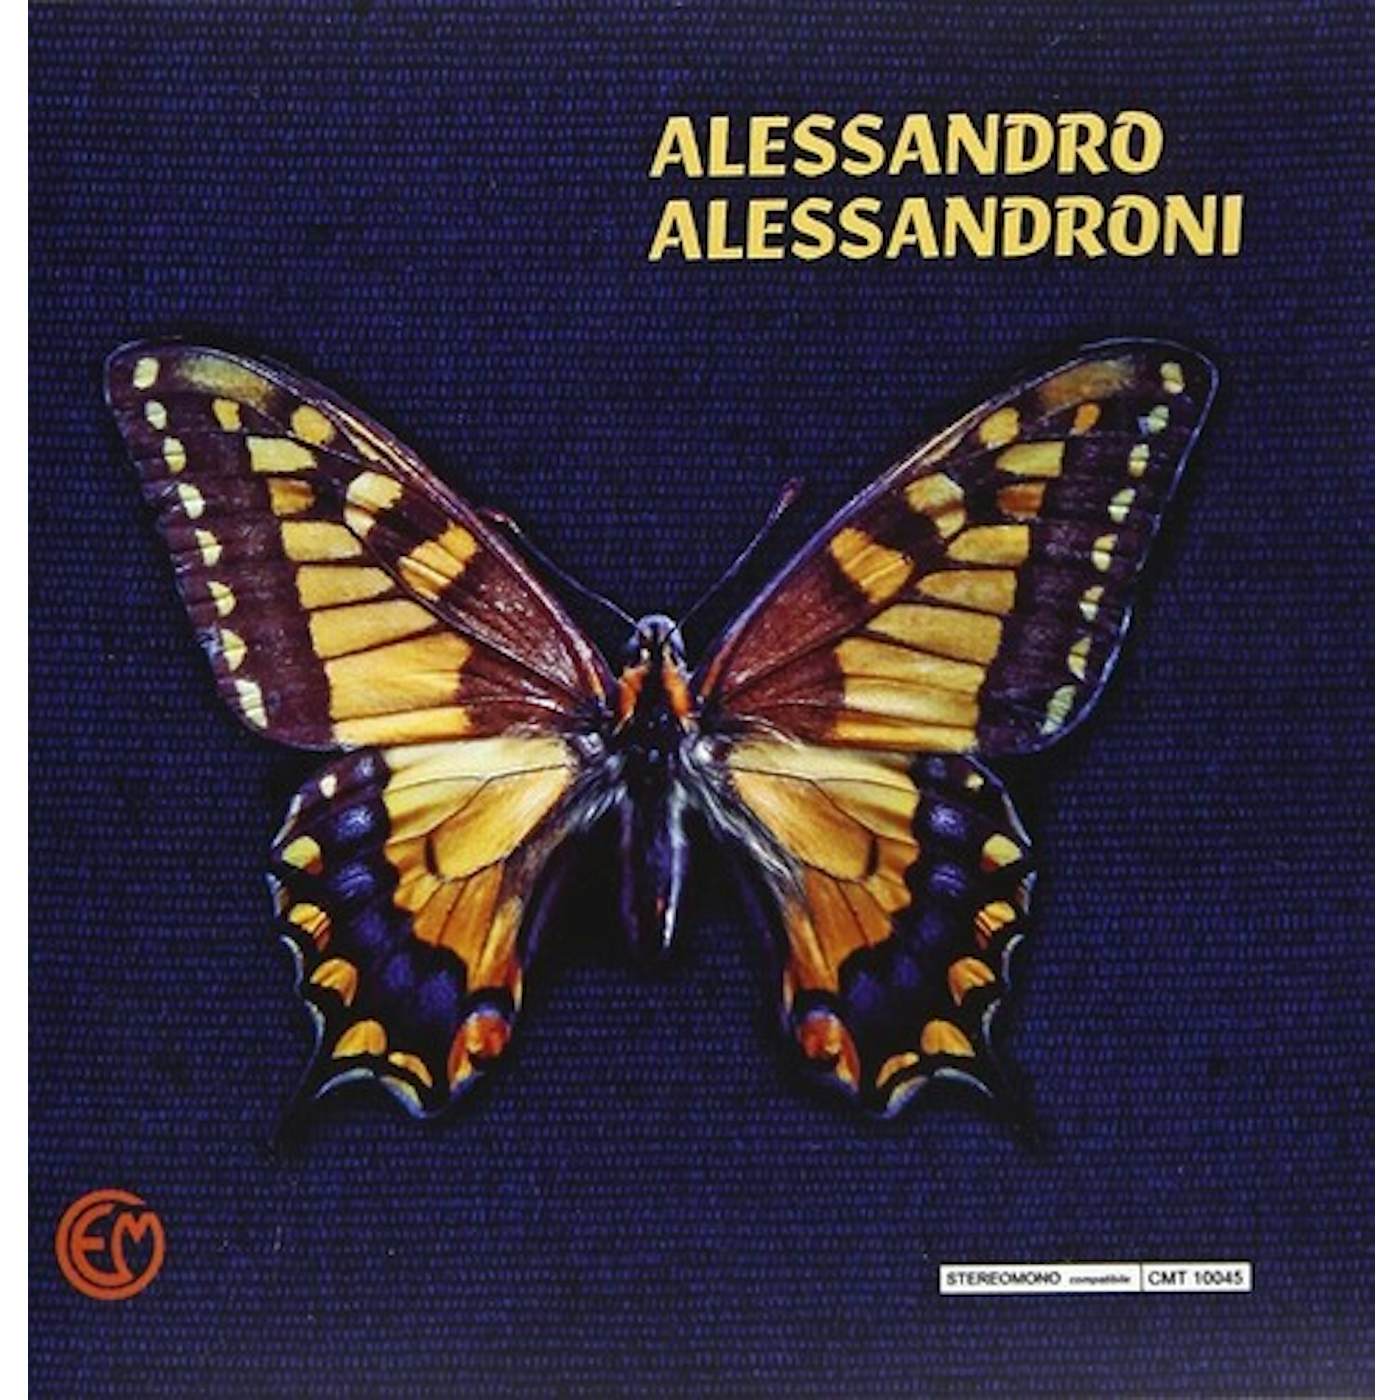 Alessandro Alessandroni BUTTERFLY 3 / Original Soundtrack CD